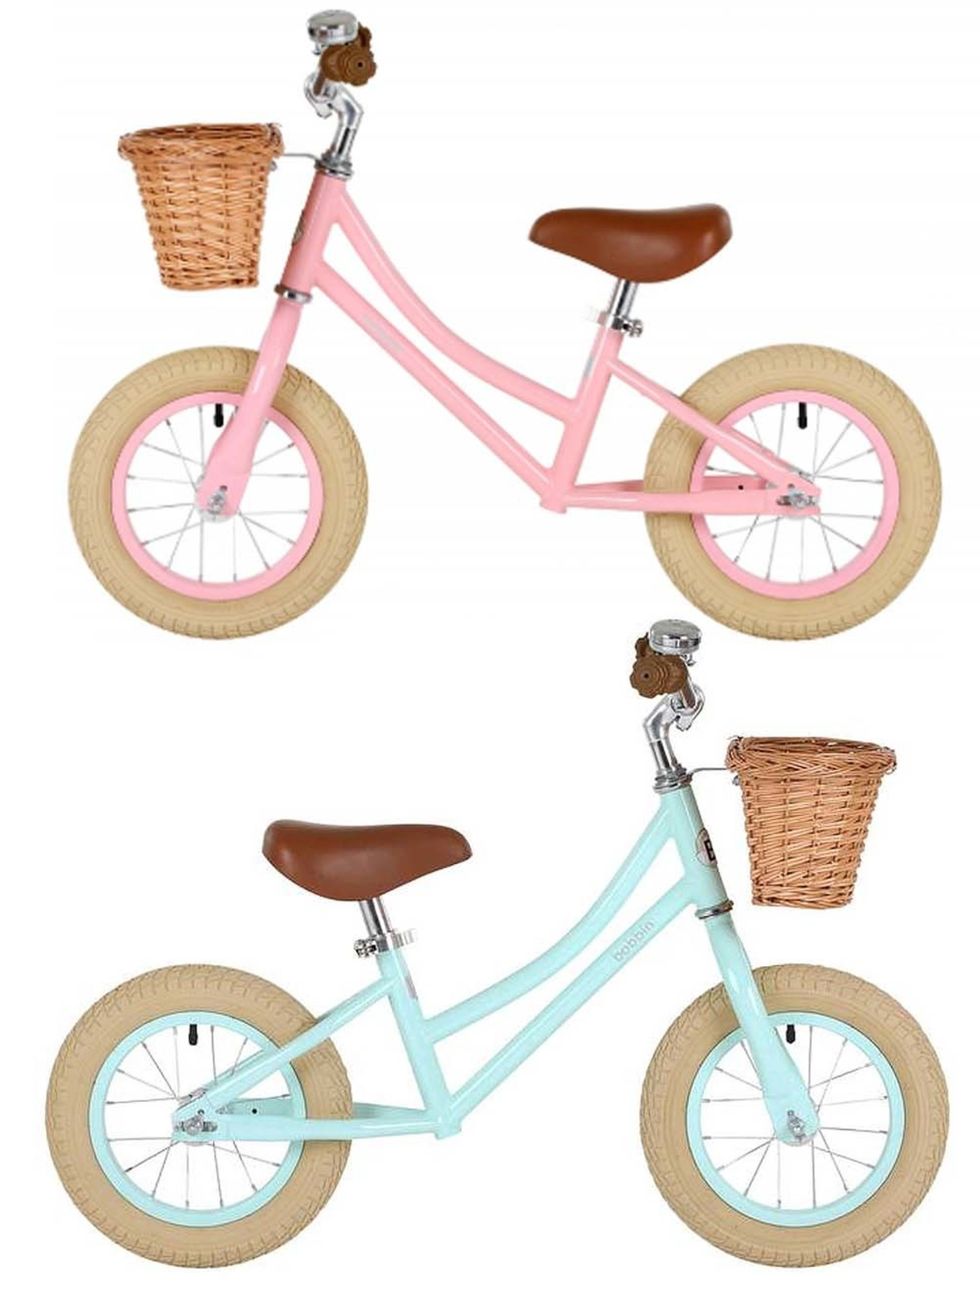 Wheel, Bicycle, Bicycle wheel, Bicycle tire, Land vehicle, Vehicle, Bicycle part, Bicycle accessory, Bicycle wheel rim, Bicycle fork, 